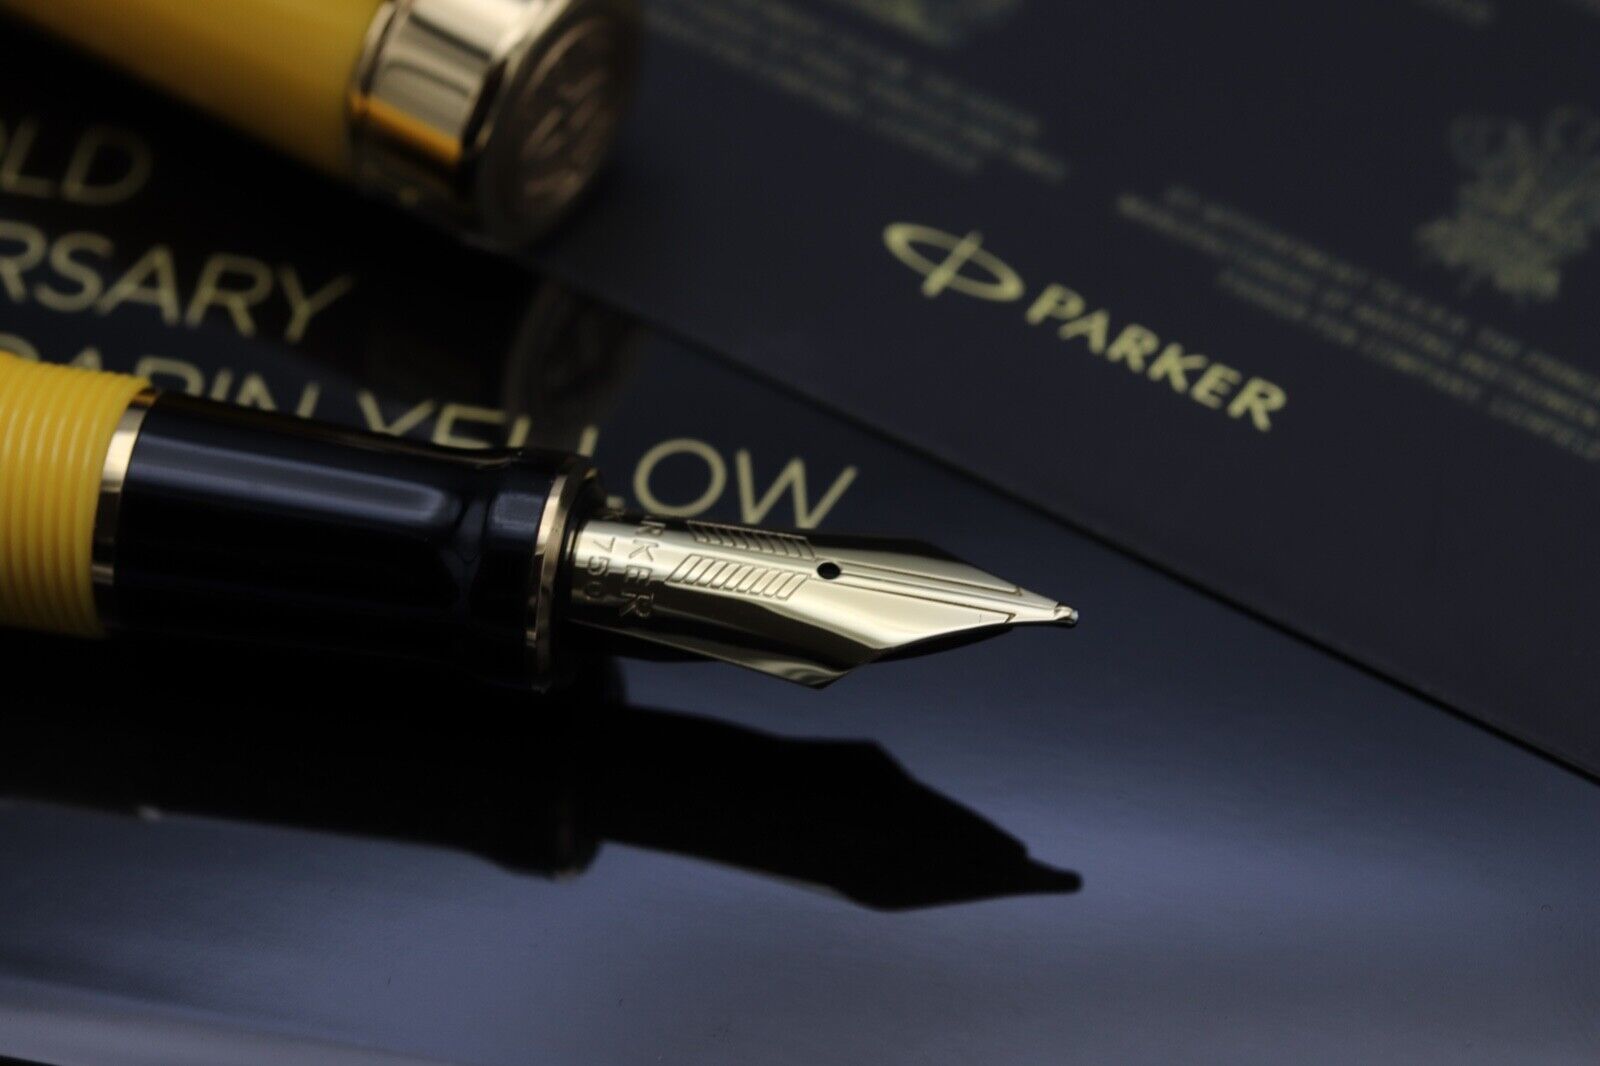 Lot - Parker, Duofold Mandarin Yellow Limited Edition Fountain Pen